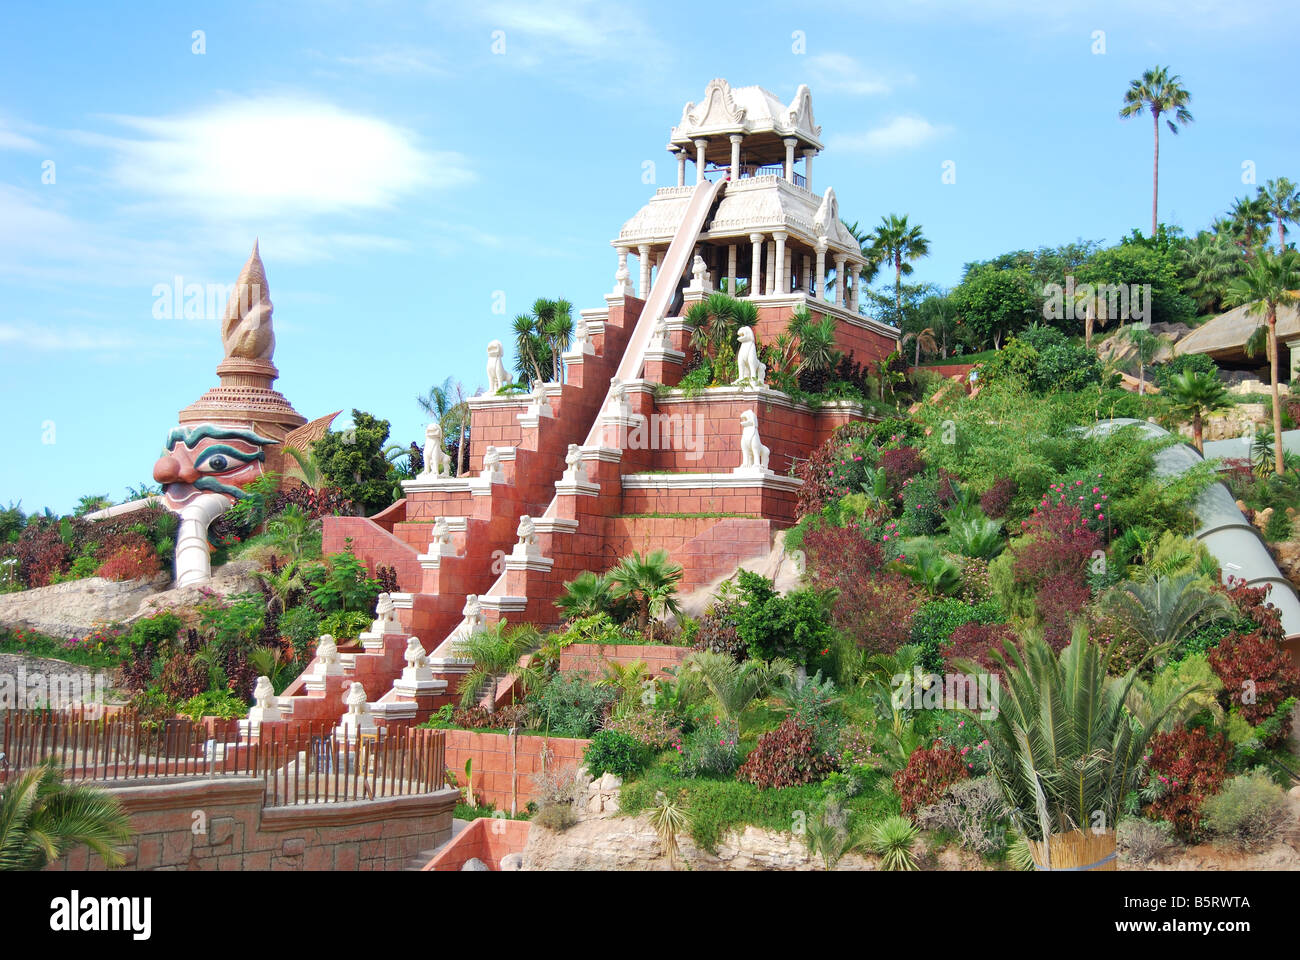 Tower of Power ride, Siam Park Water Kingdom Theme Park, Costa Adeje, Tenerife, Canary Islands, Spain Stock Photo